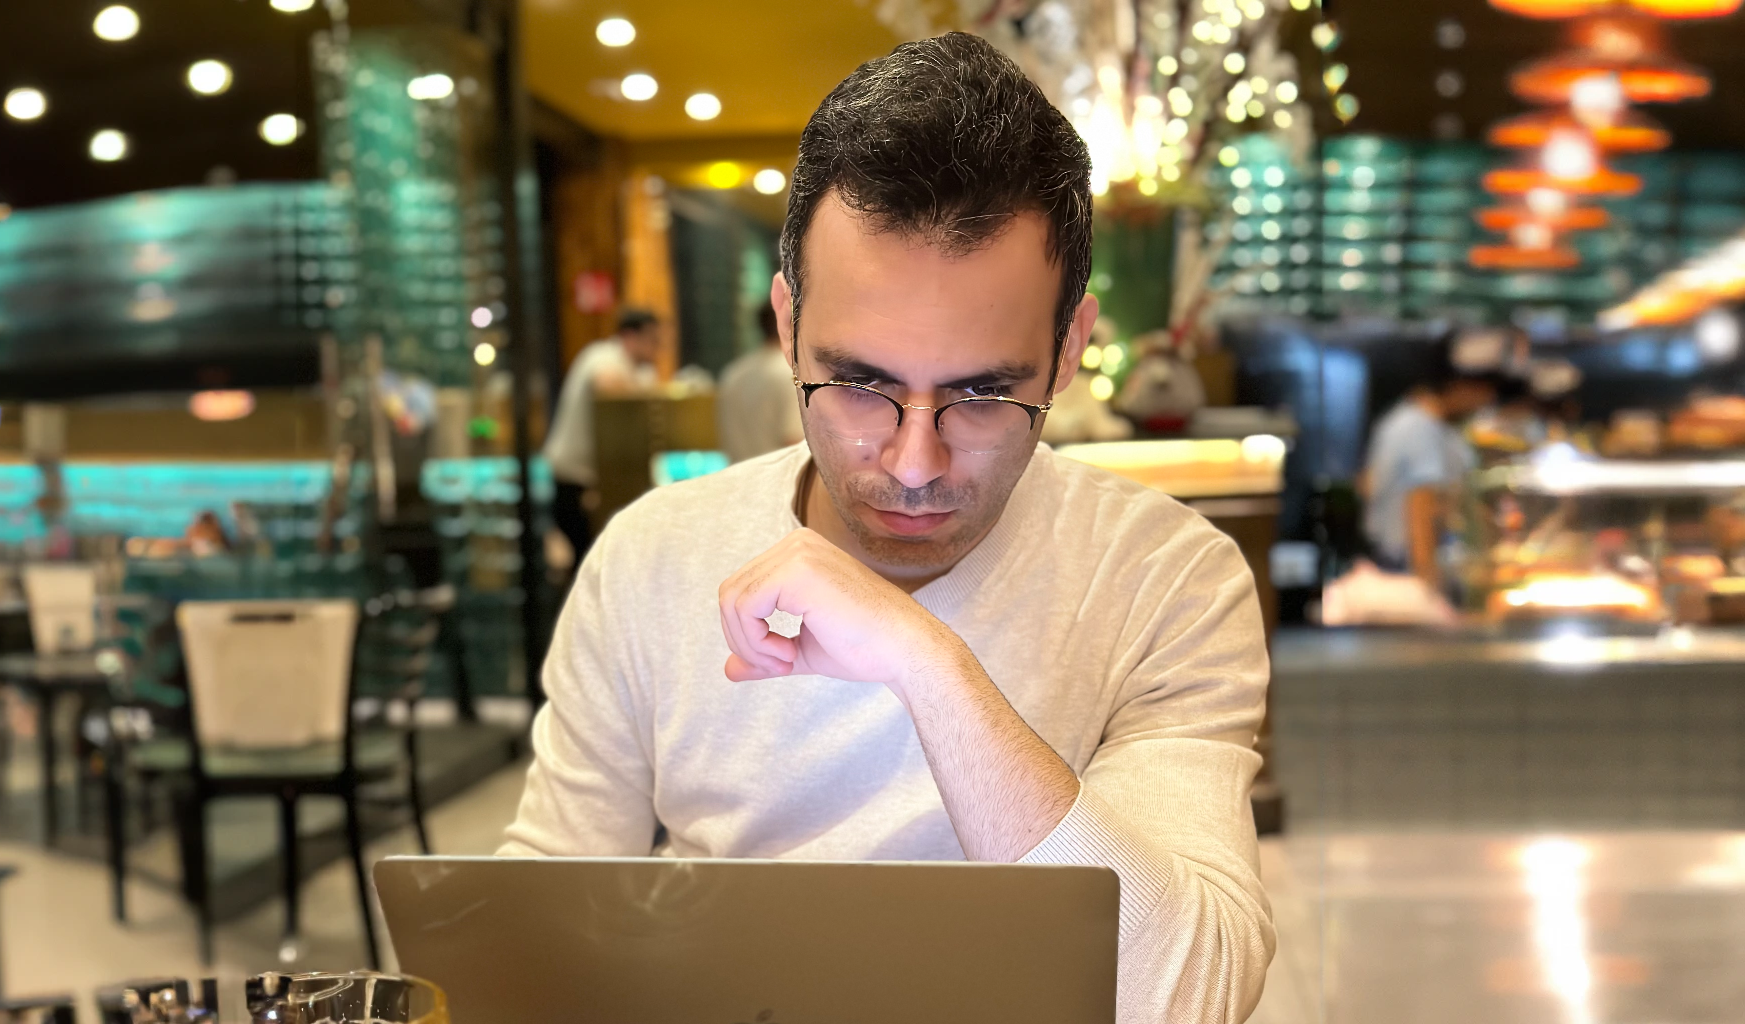 Arash Davari Serej, an elite digital strategist handling millions of followers for clients, shares his personal journey